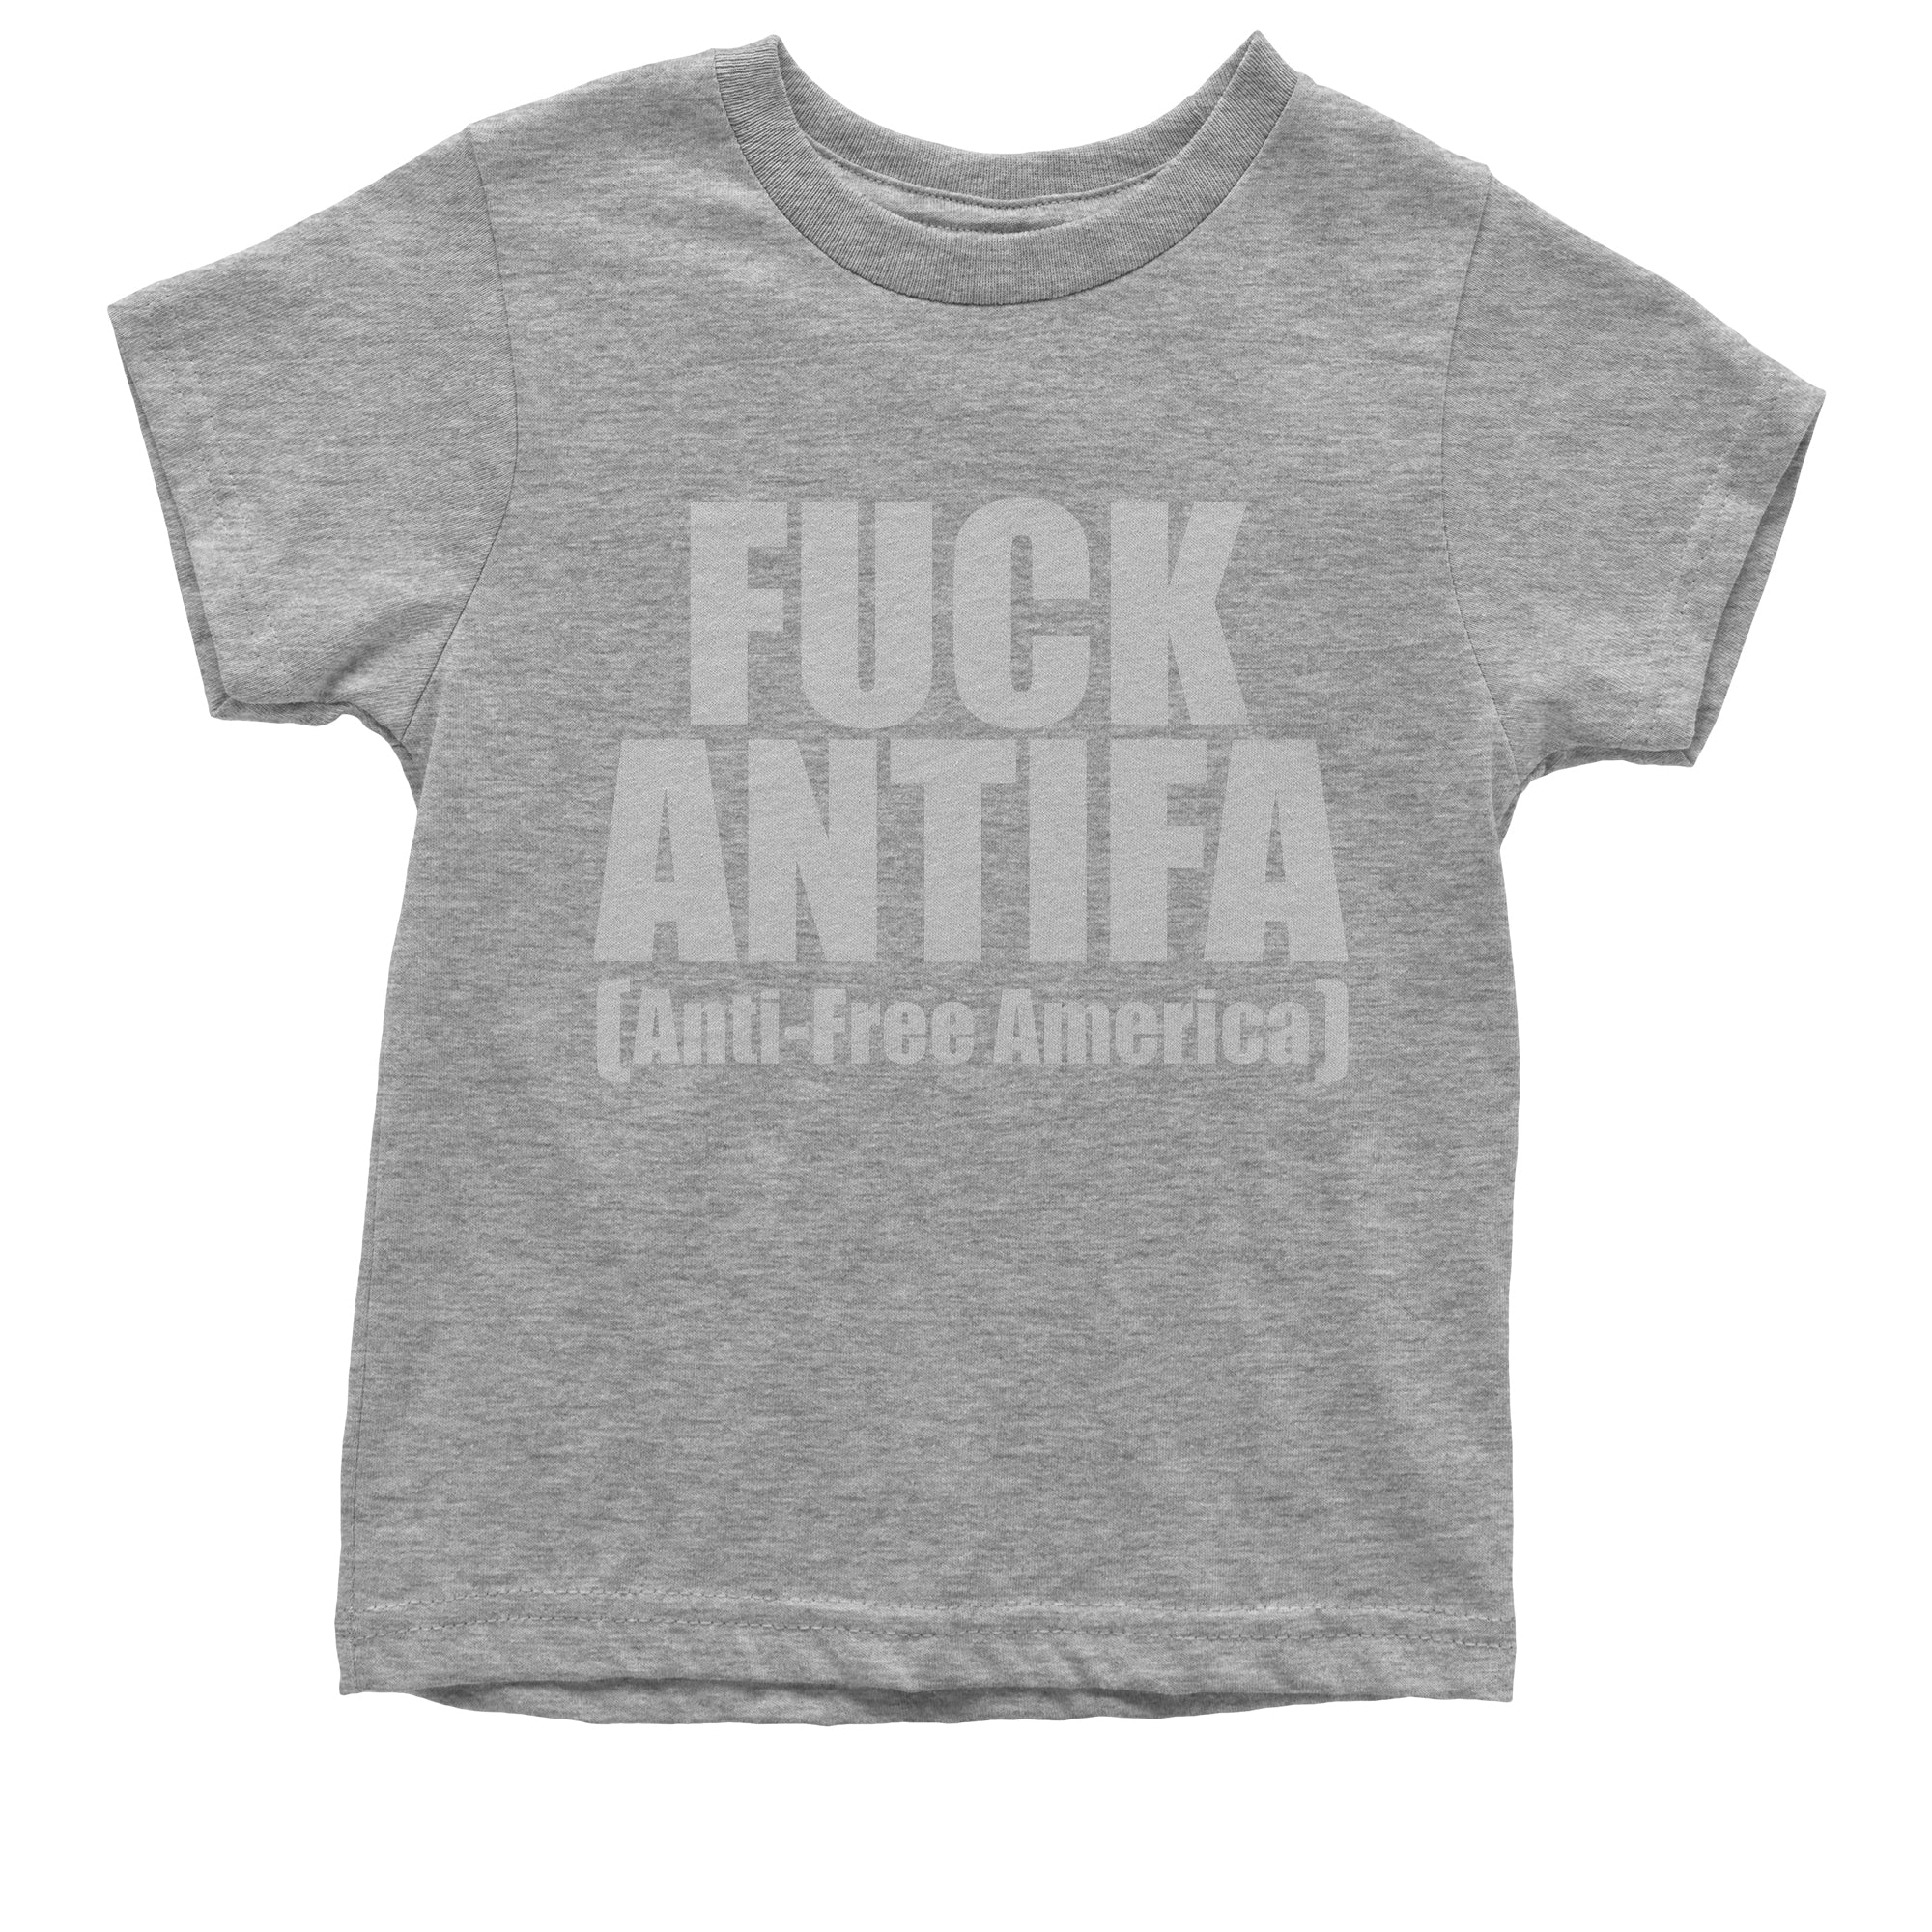 Fuck Antifa Patriotic Pro America Kid's T-Shirt